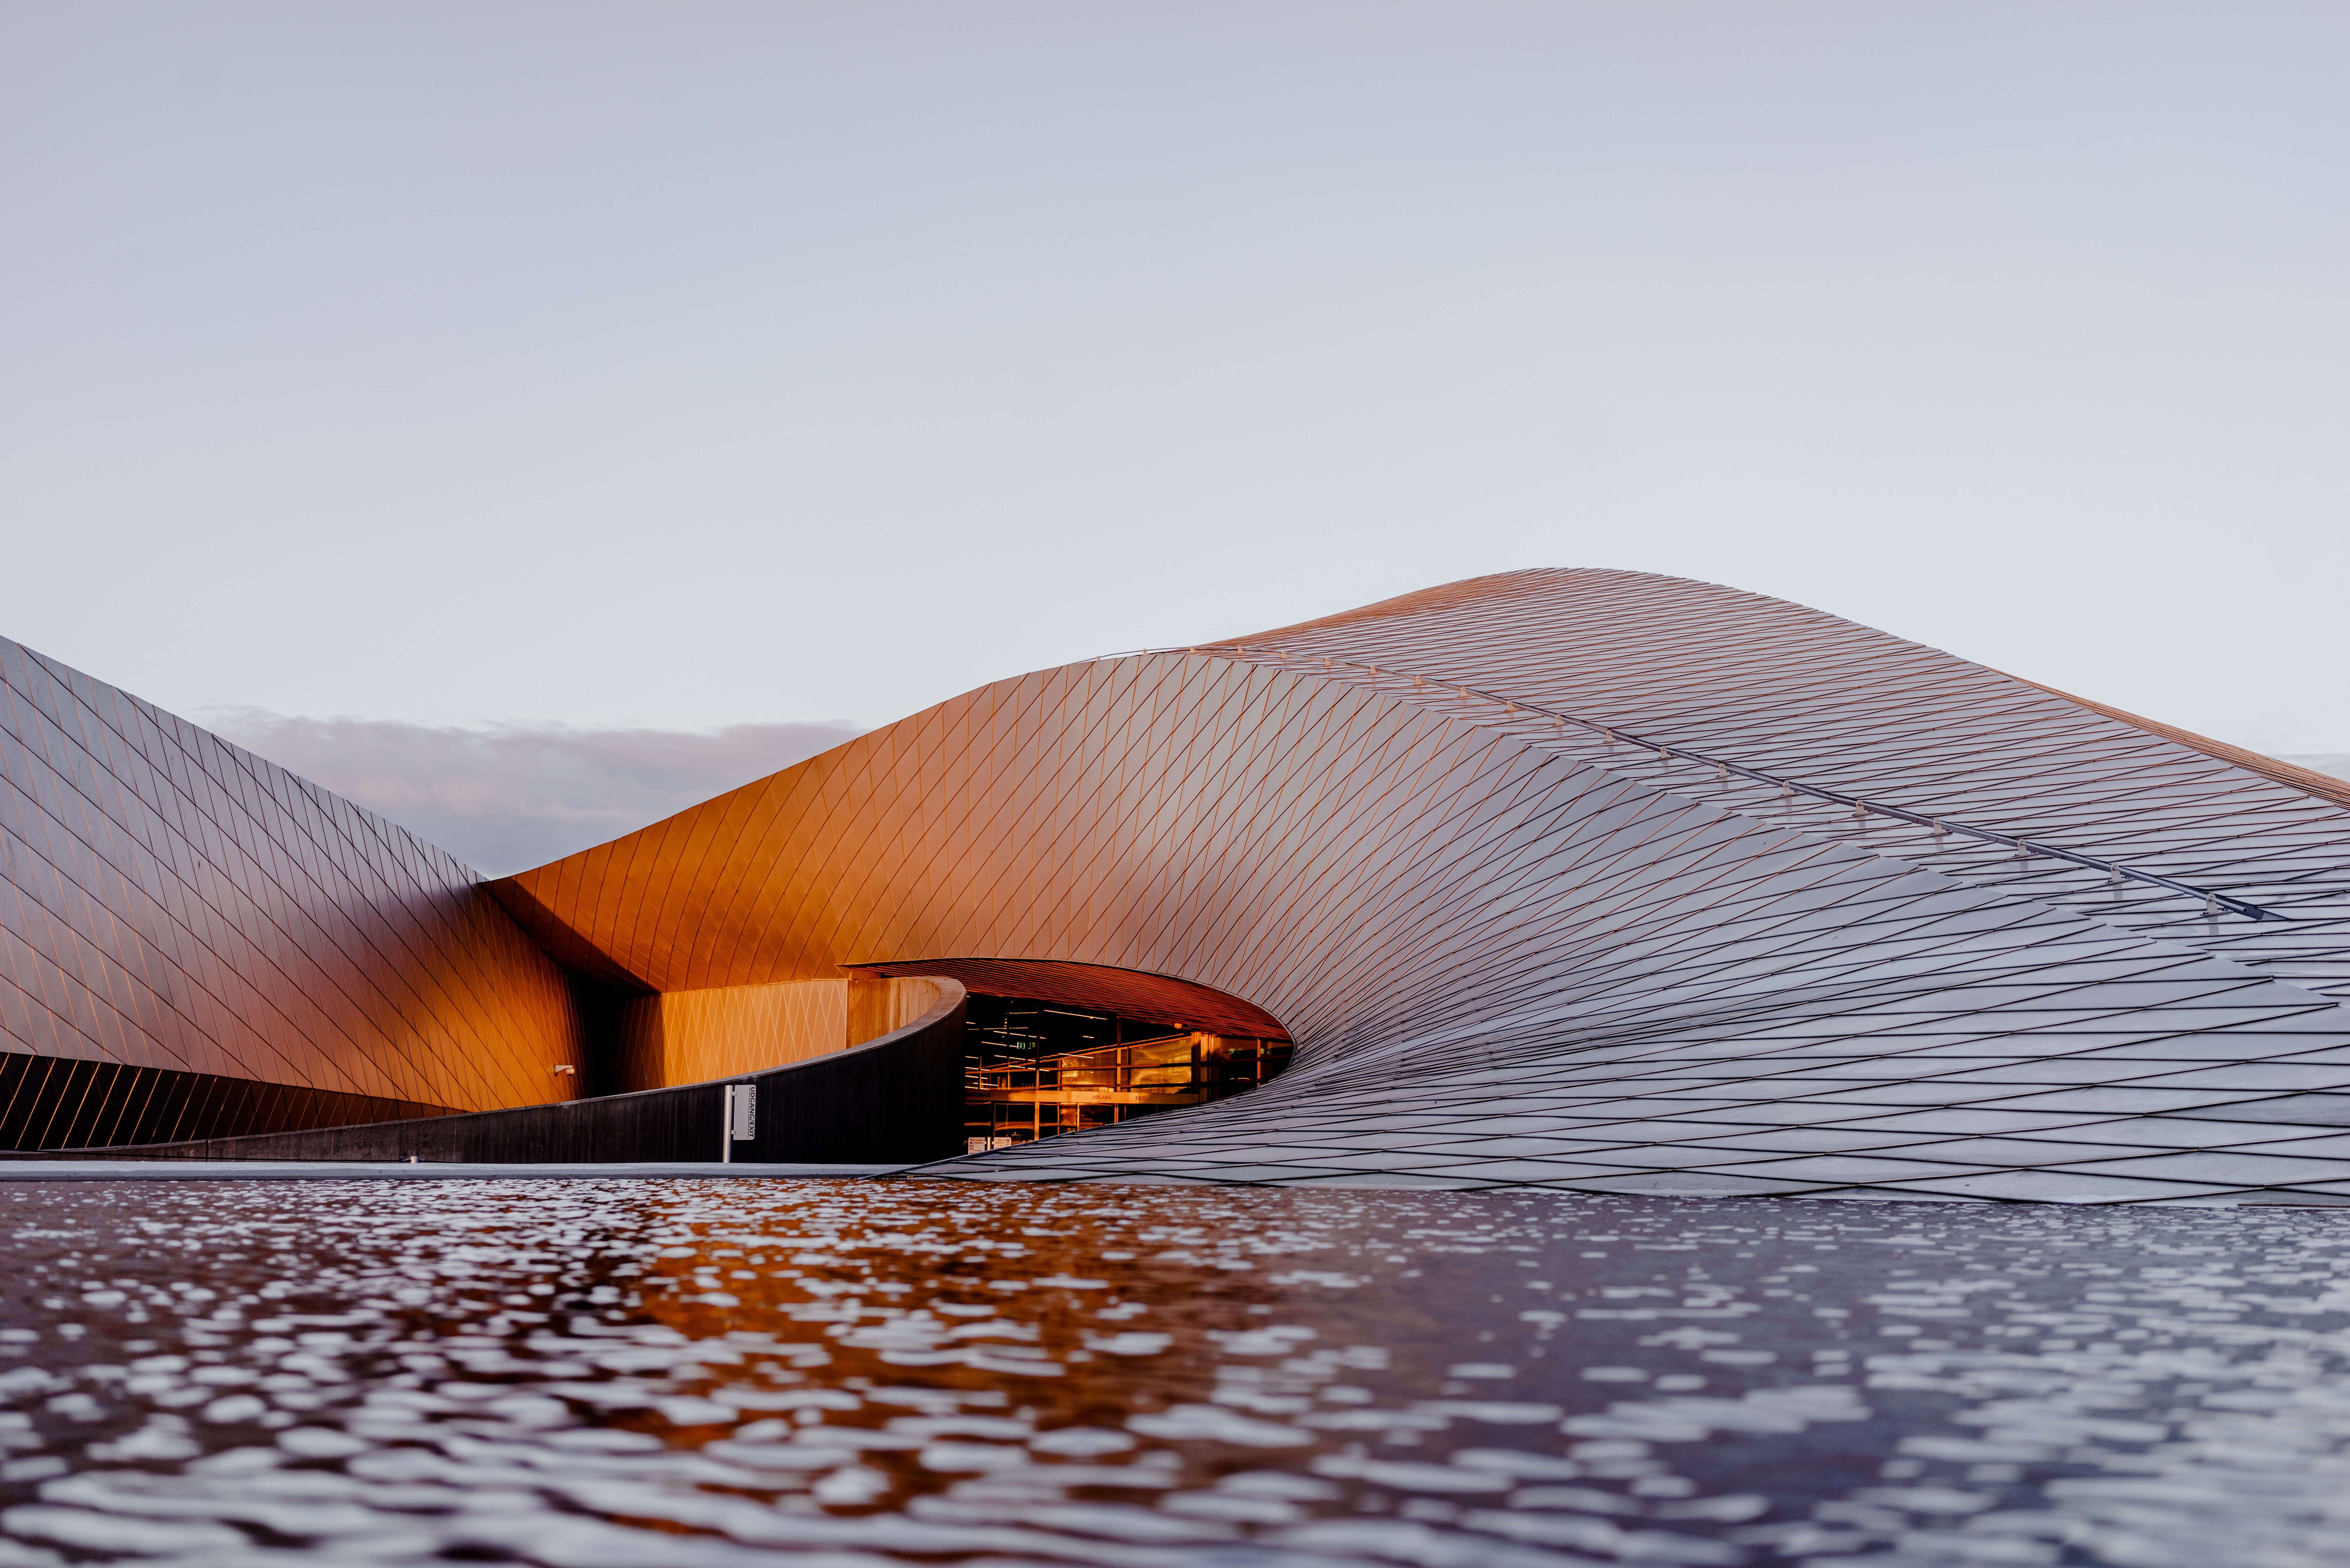 Arquitectura marina: un lugar para preservar la naturaleza